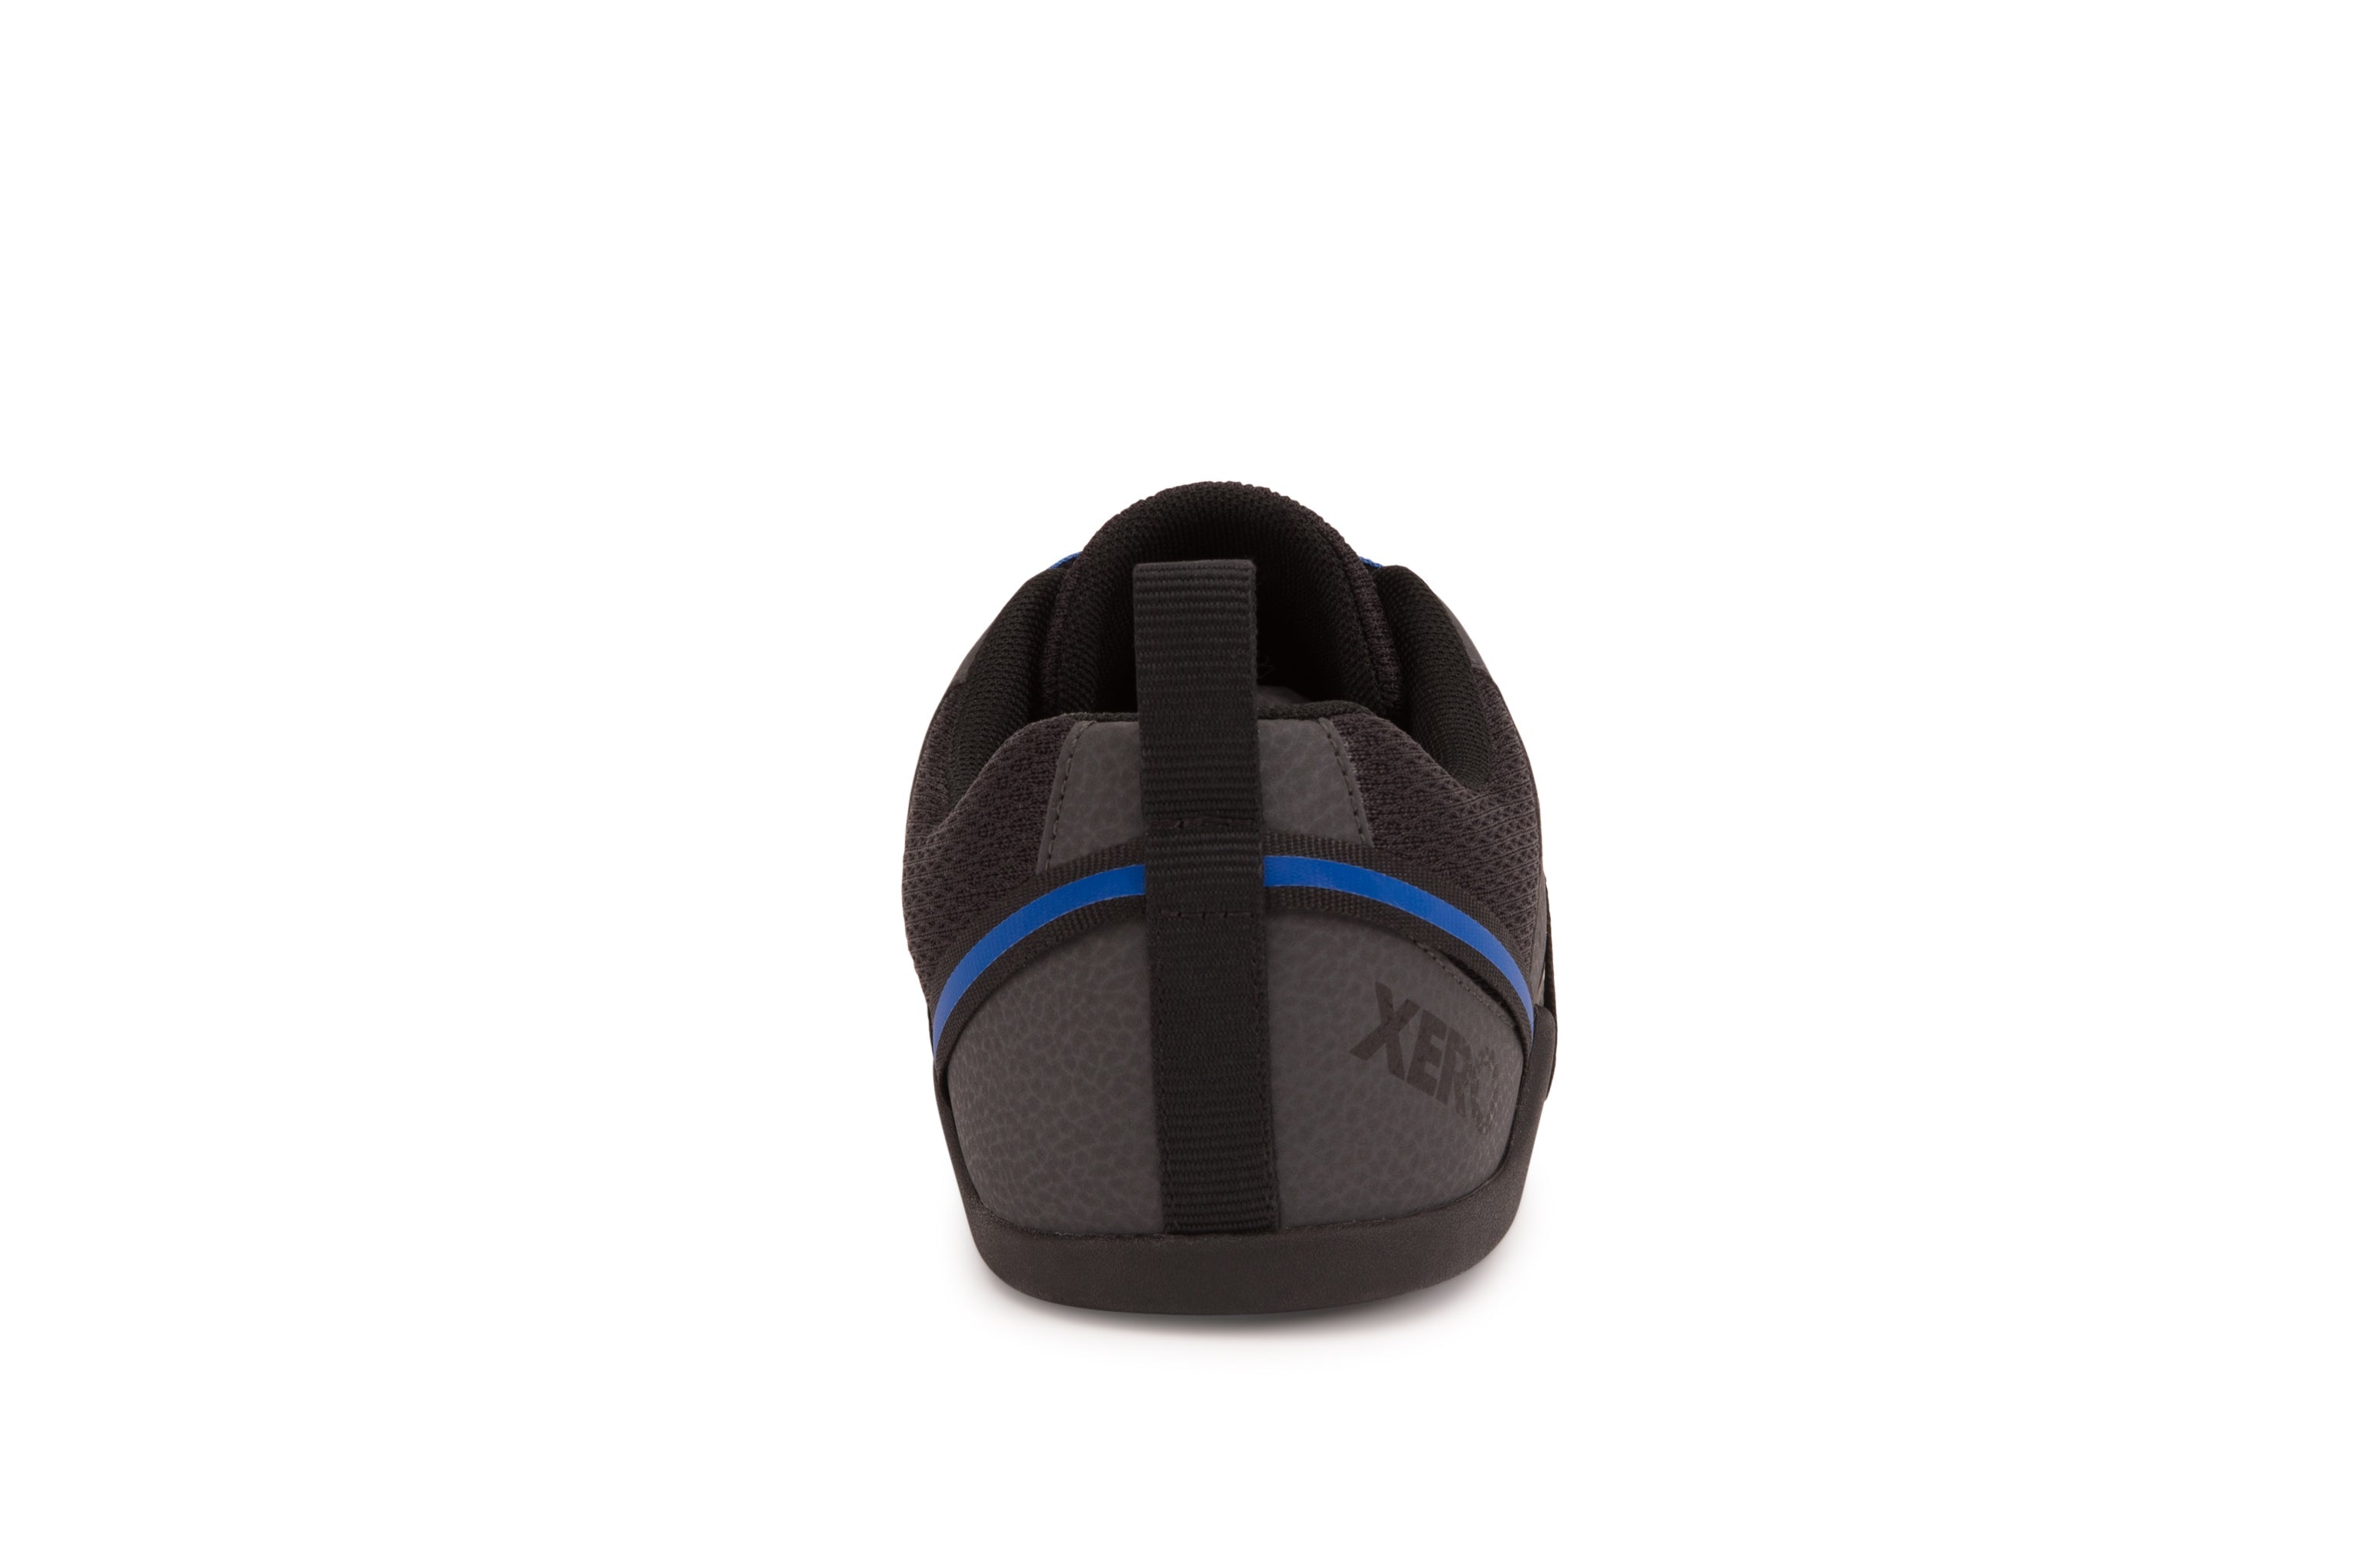 Xero Shoes Prio Womens barfods træningssko til kvinder i farven asphalt blue, bagfra